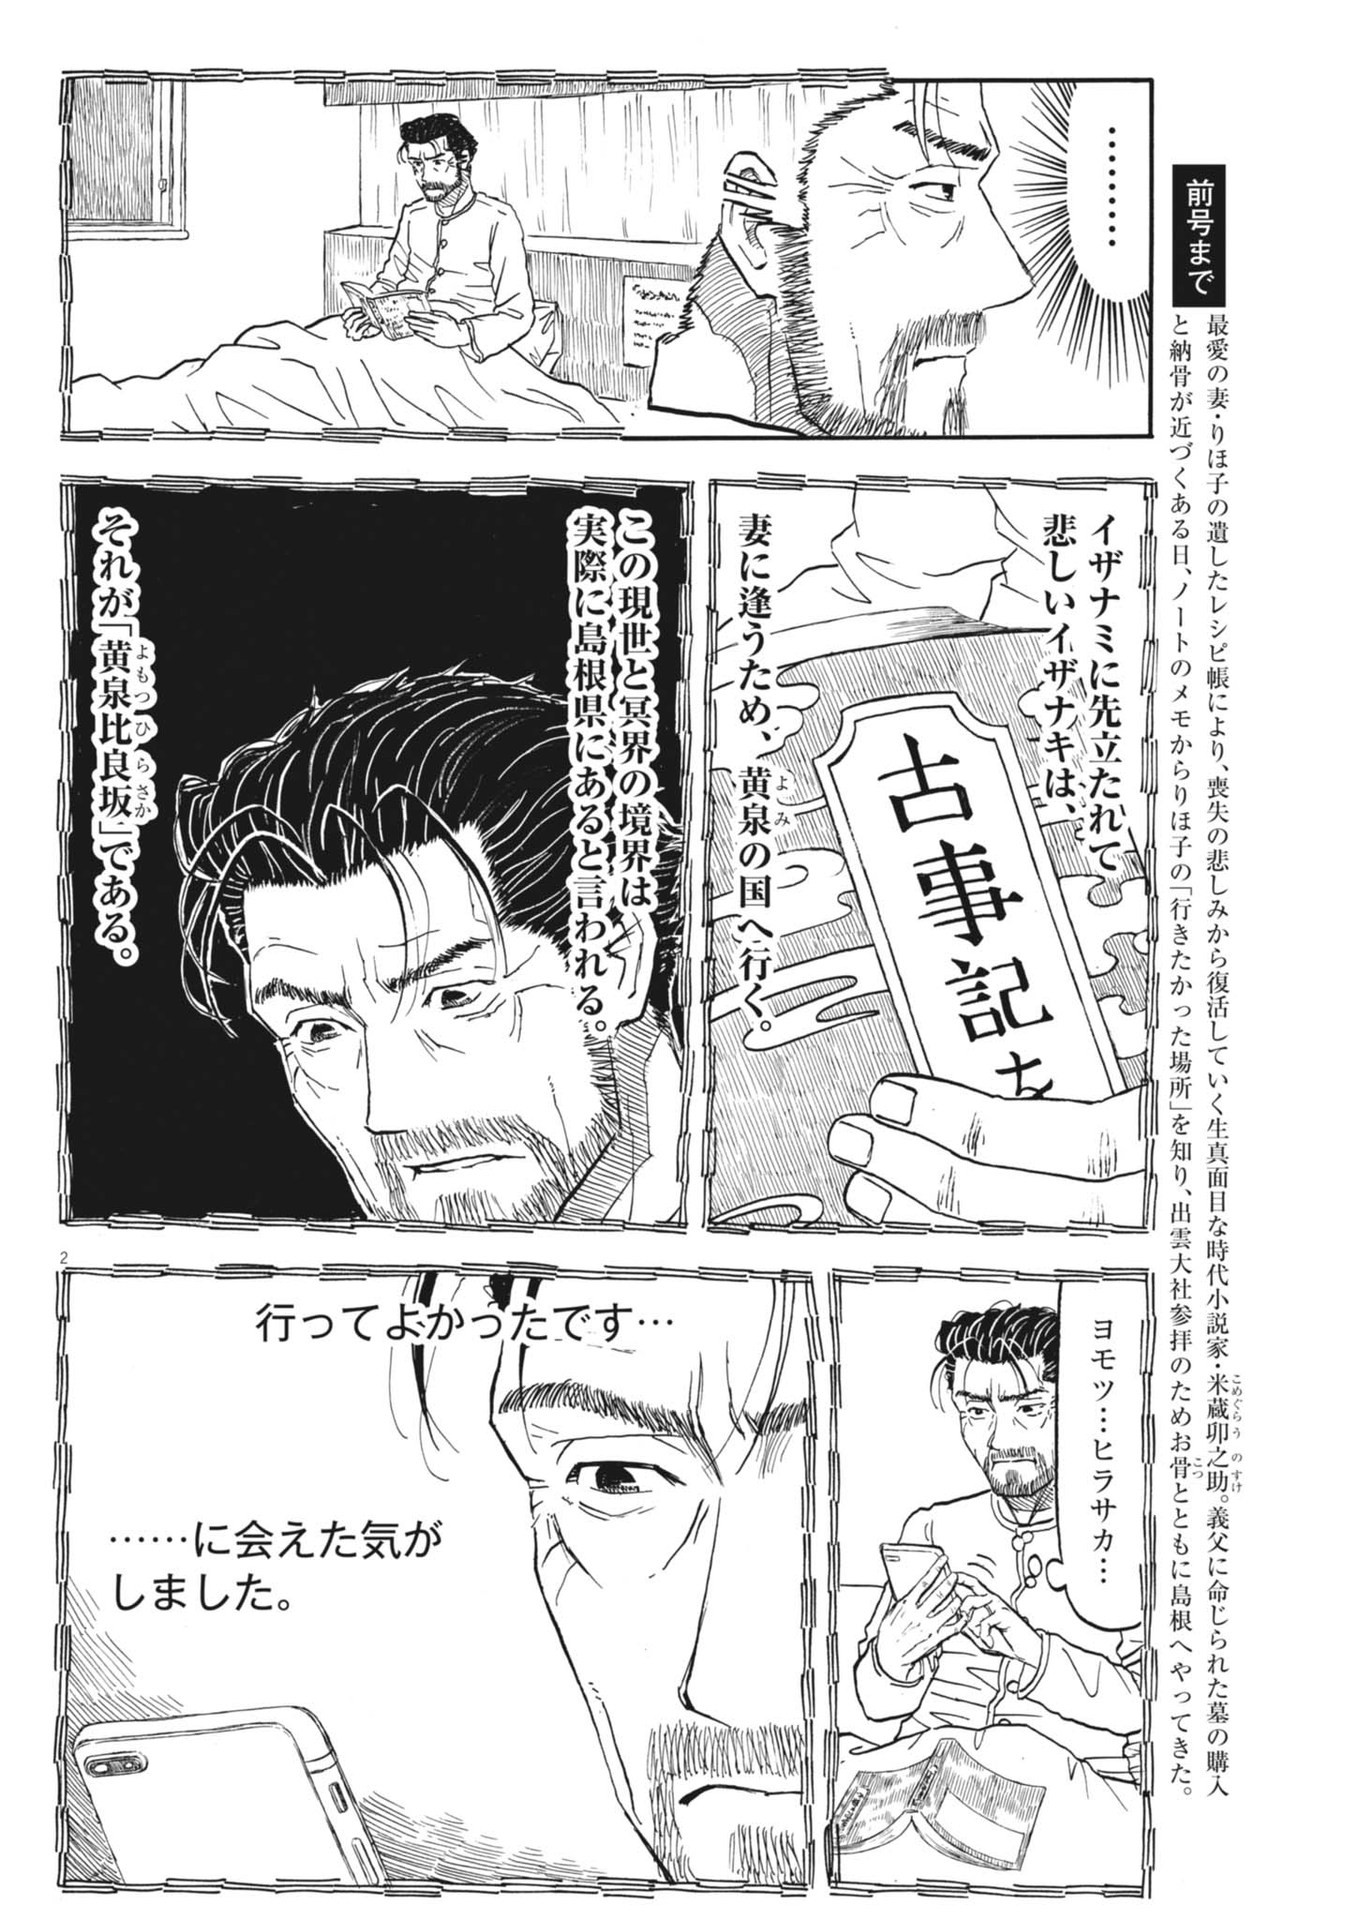 Komegura Fuufu no Recipe-chou - Chapter 36 - Page 2